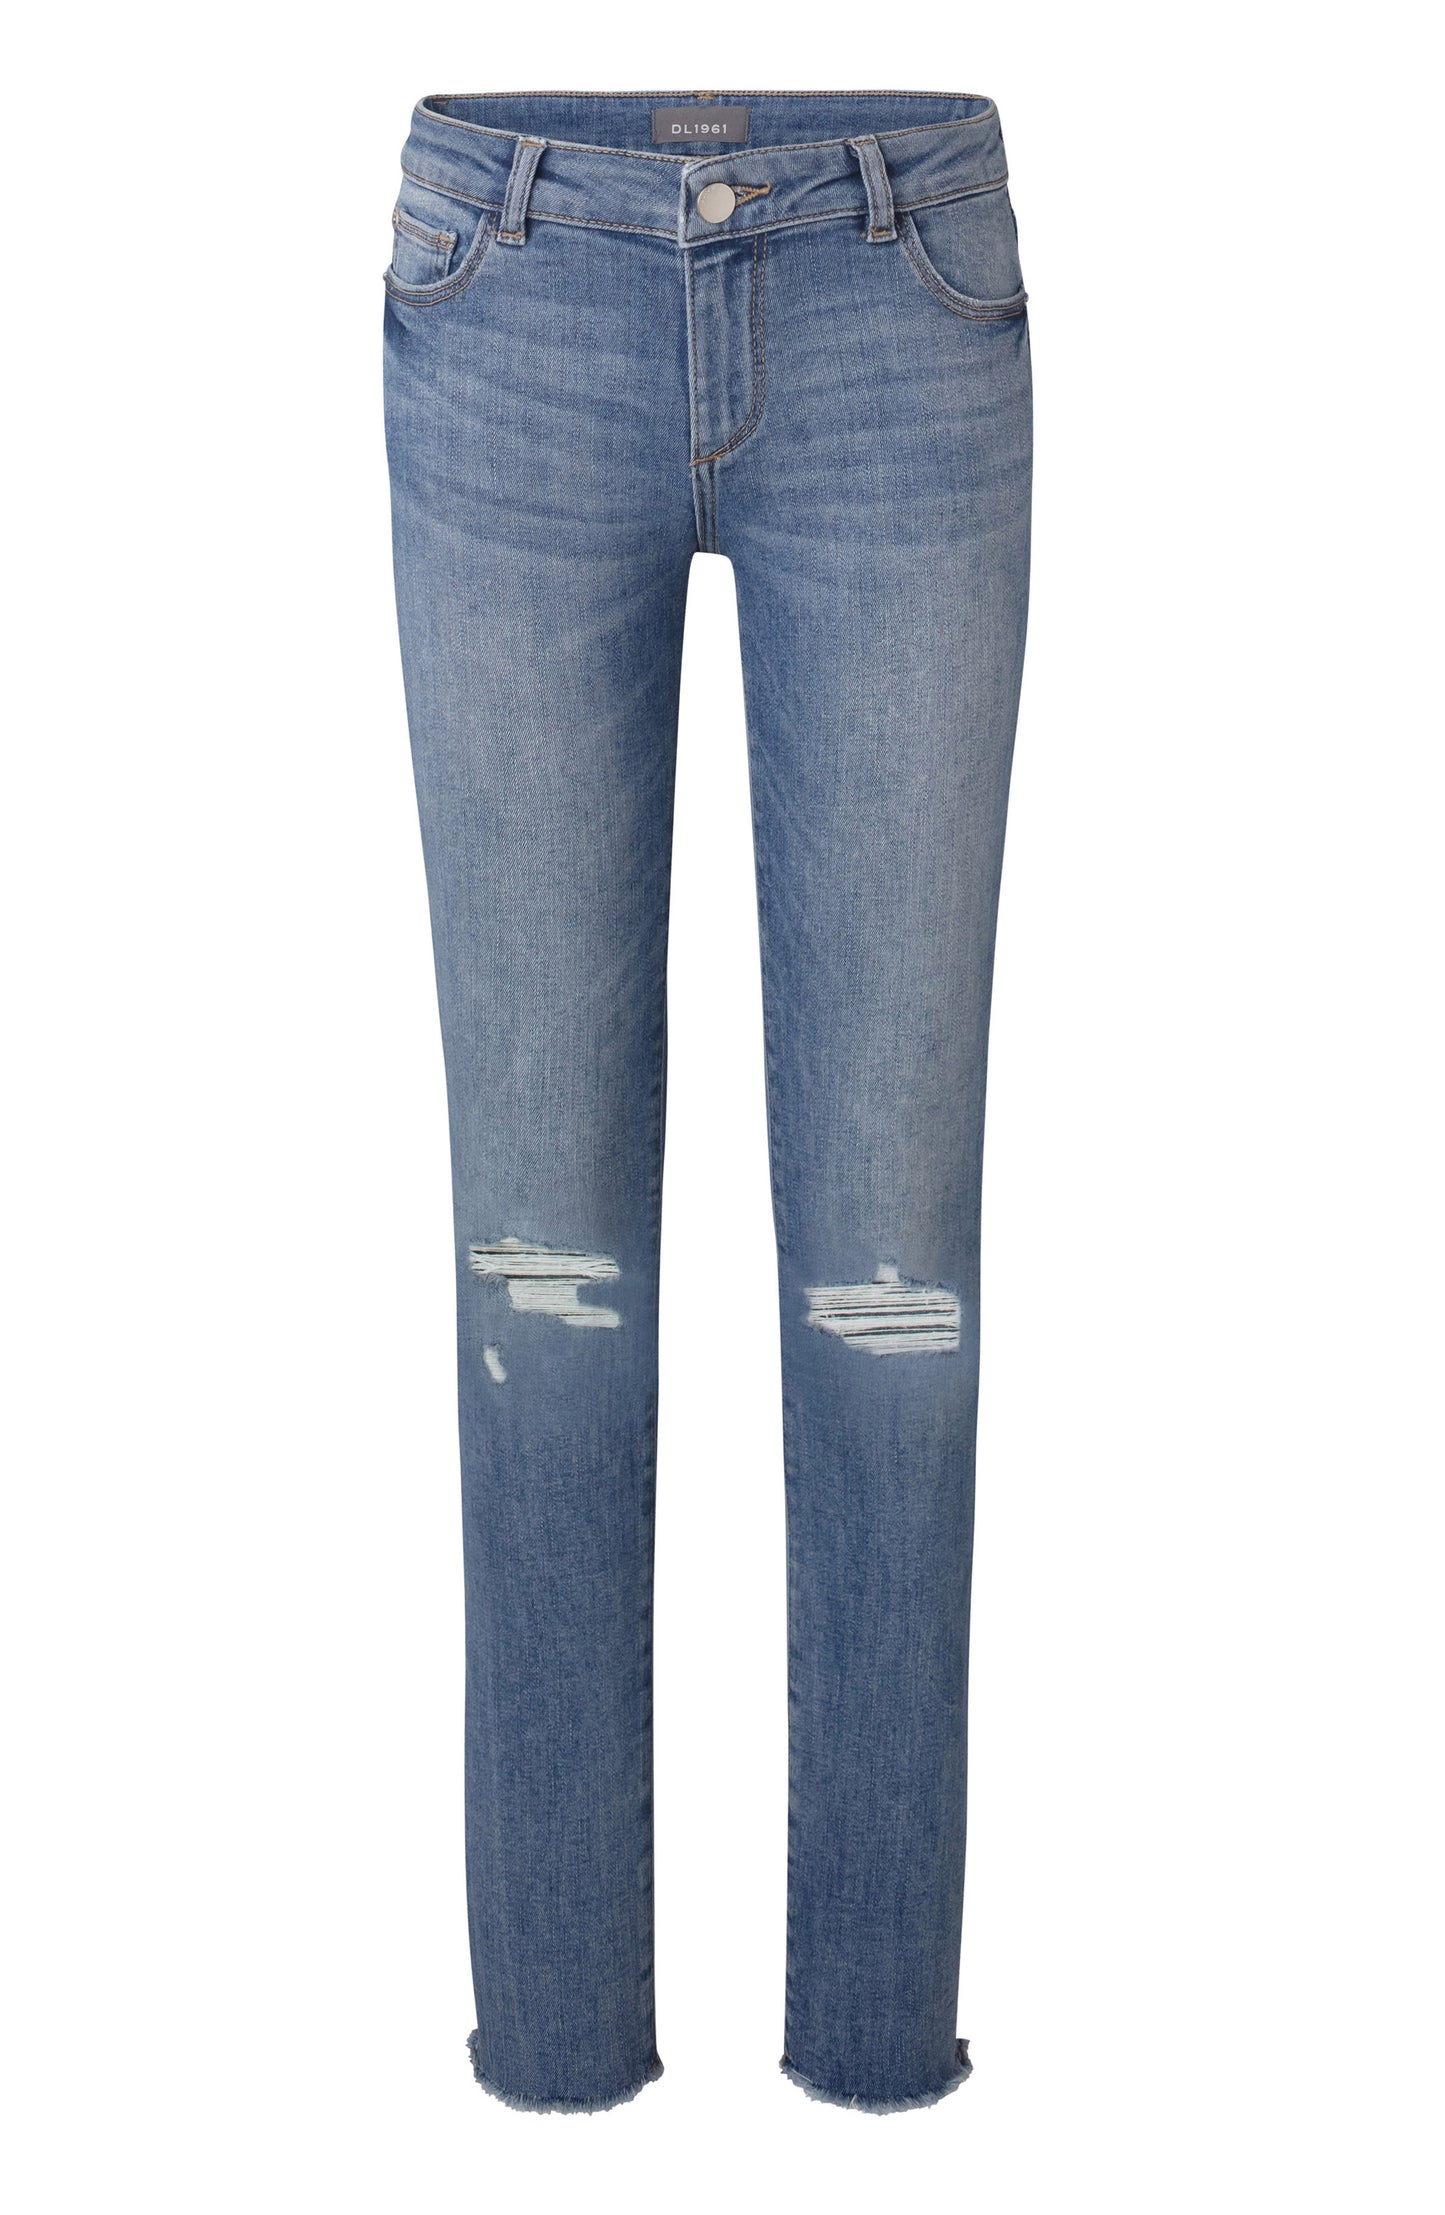 Chloe Skinny Jeans